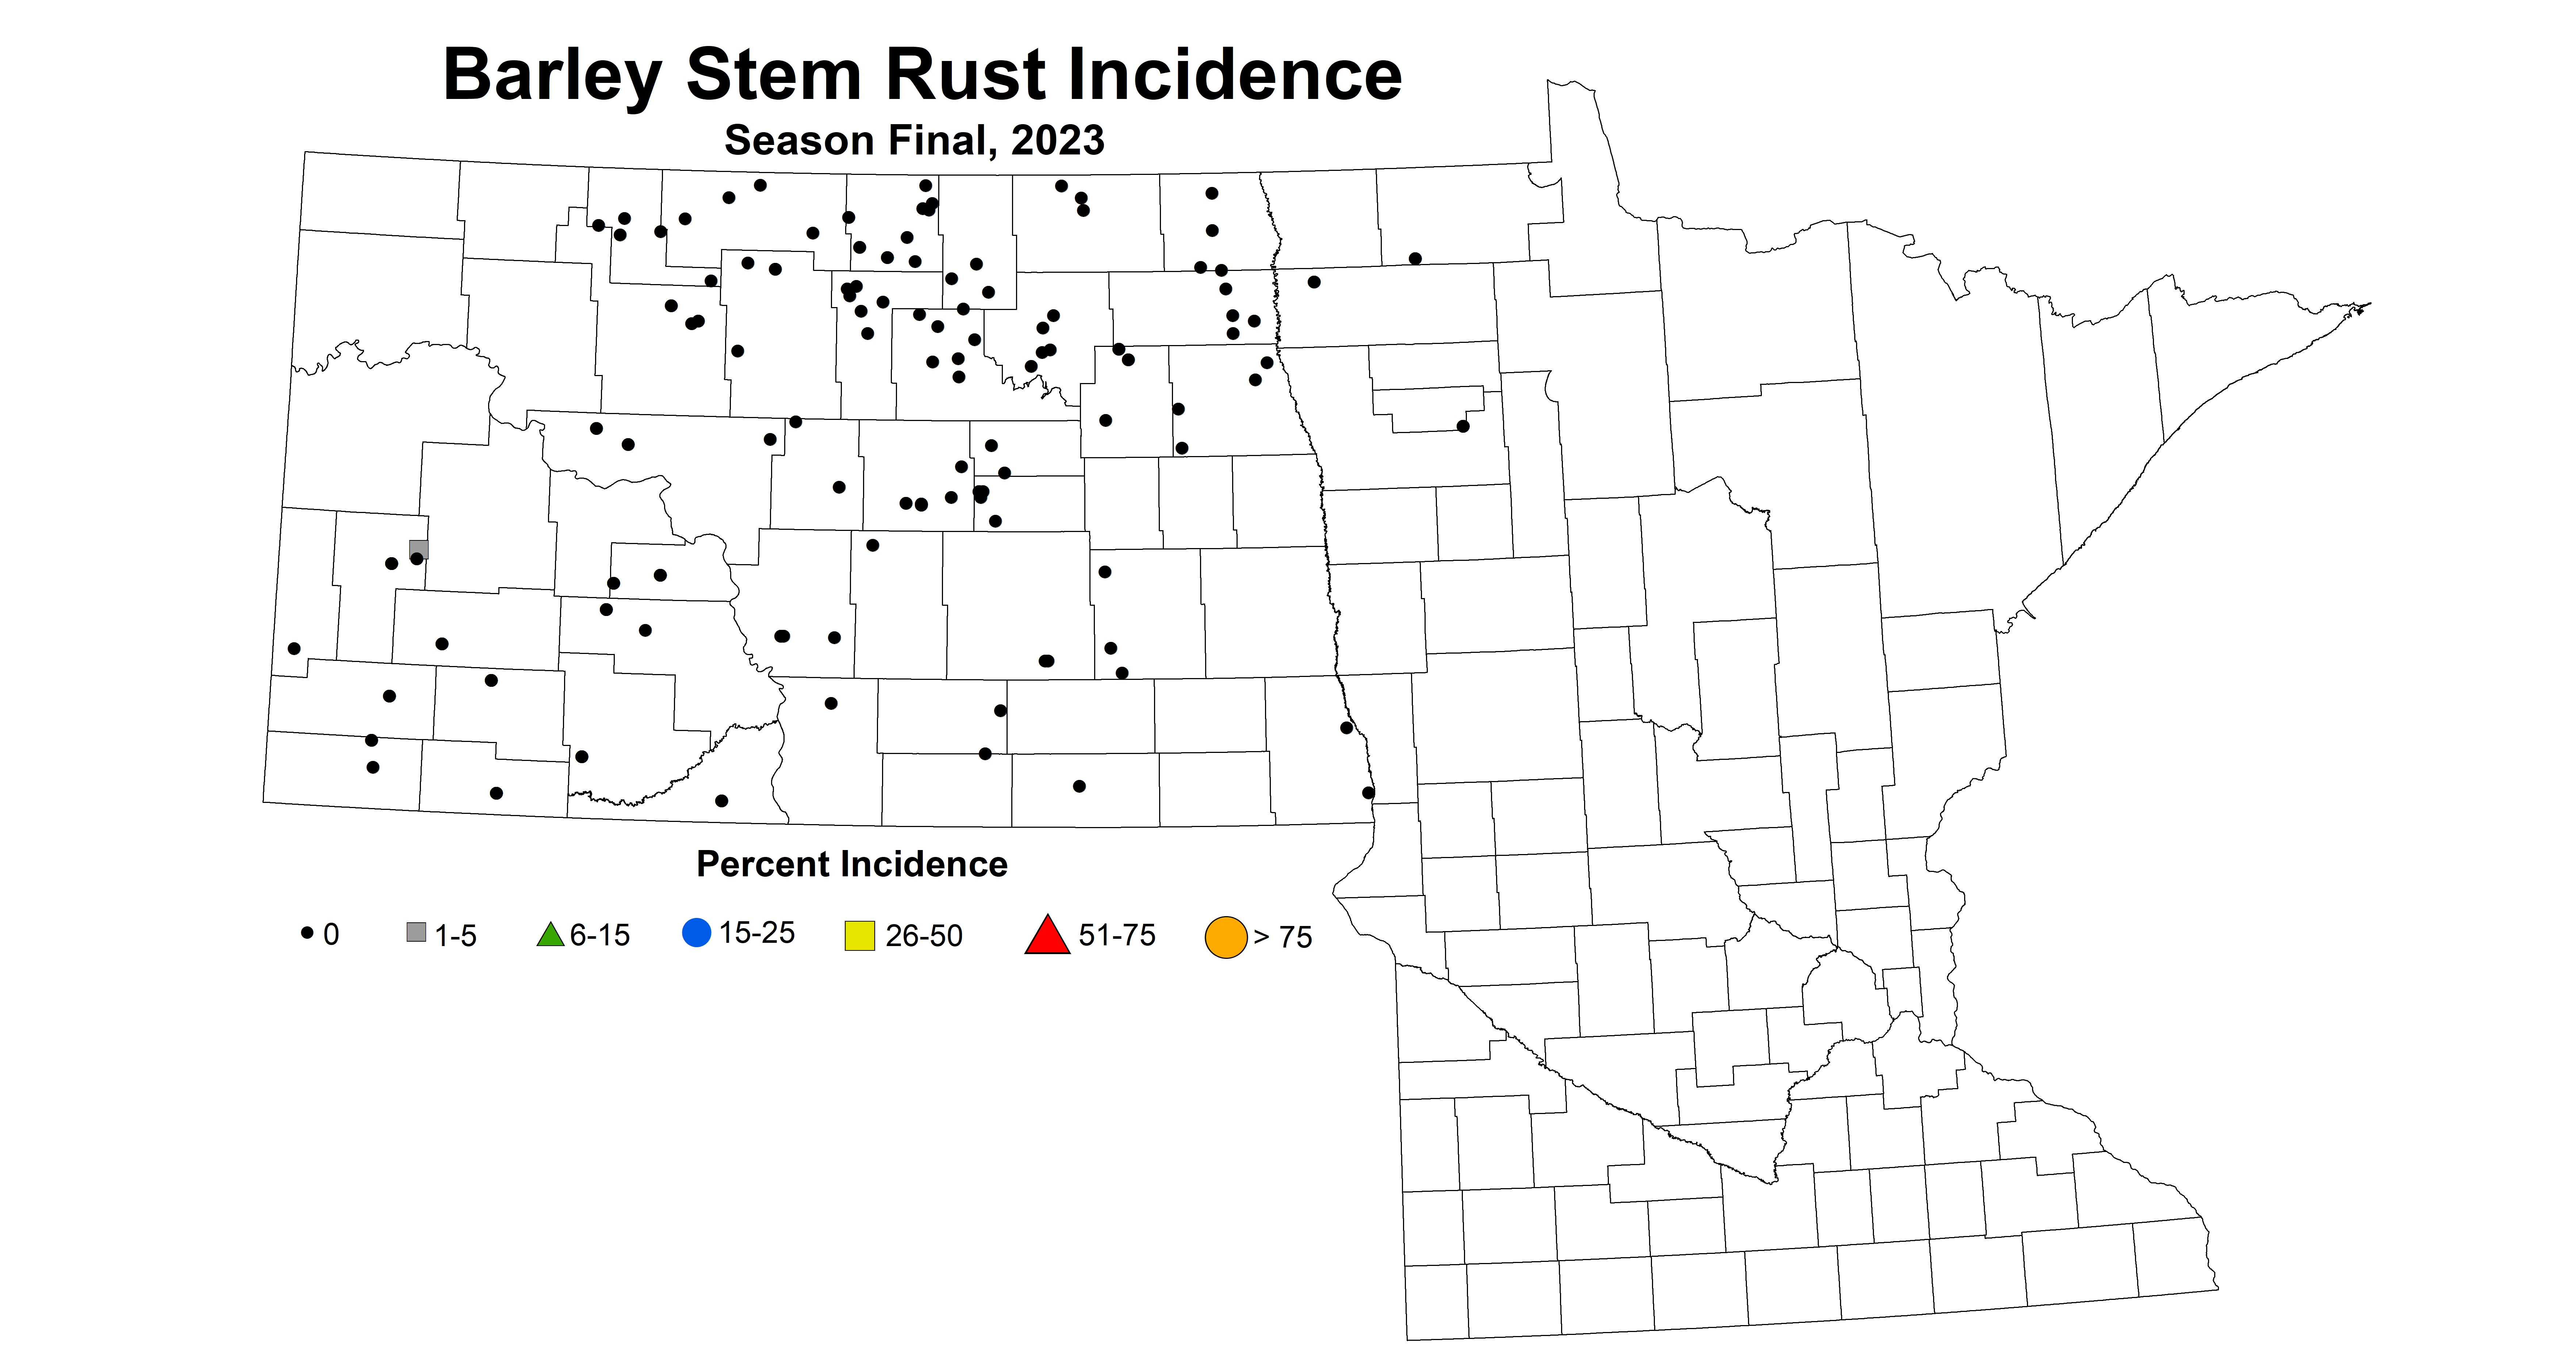 barley stem rust incidence season final 2023